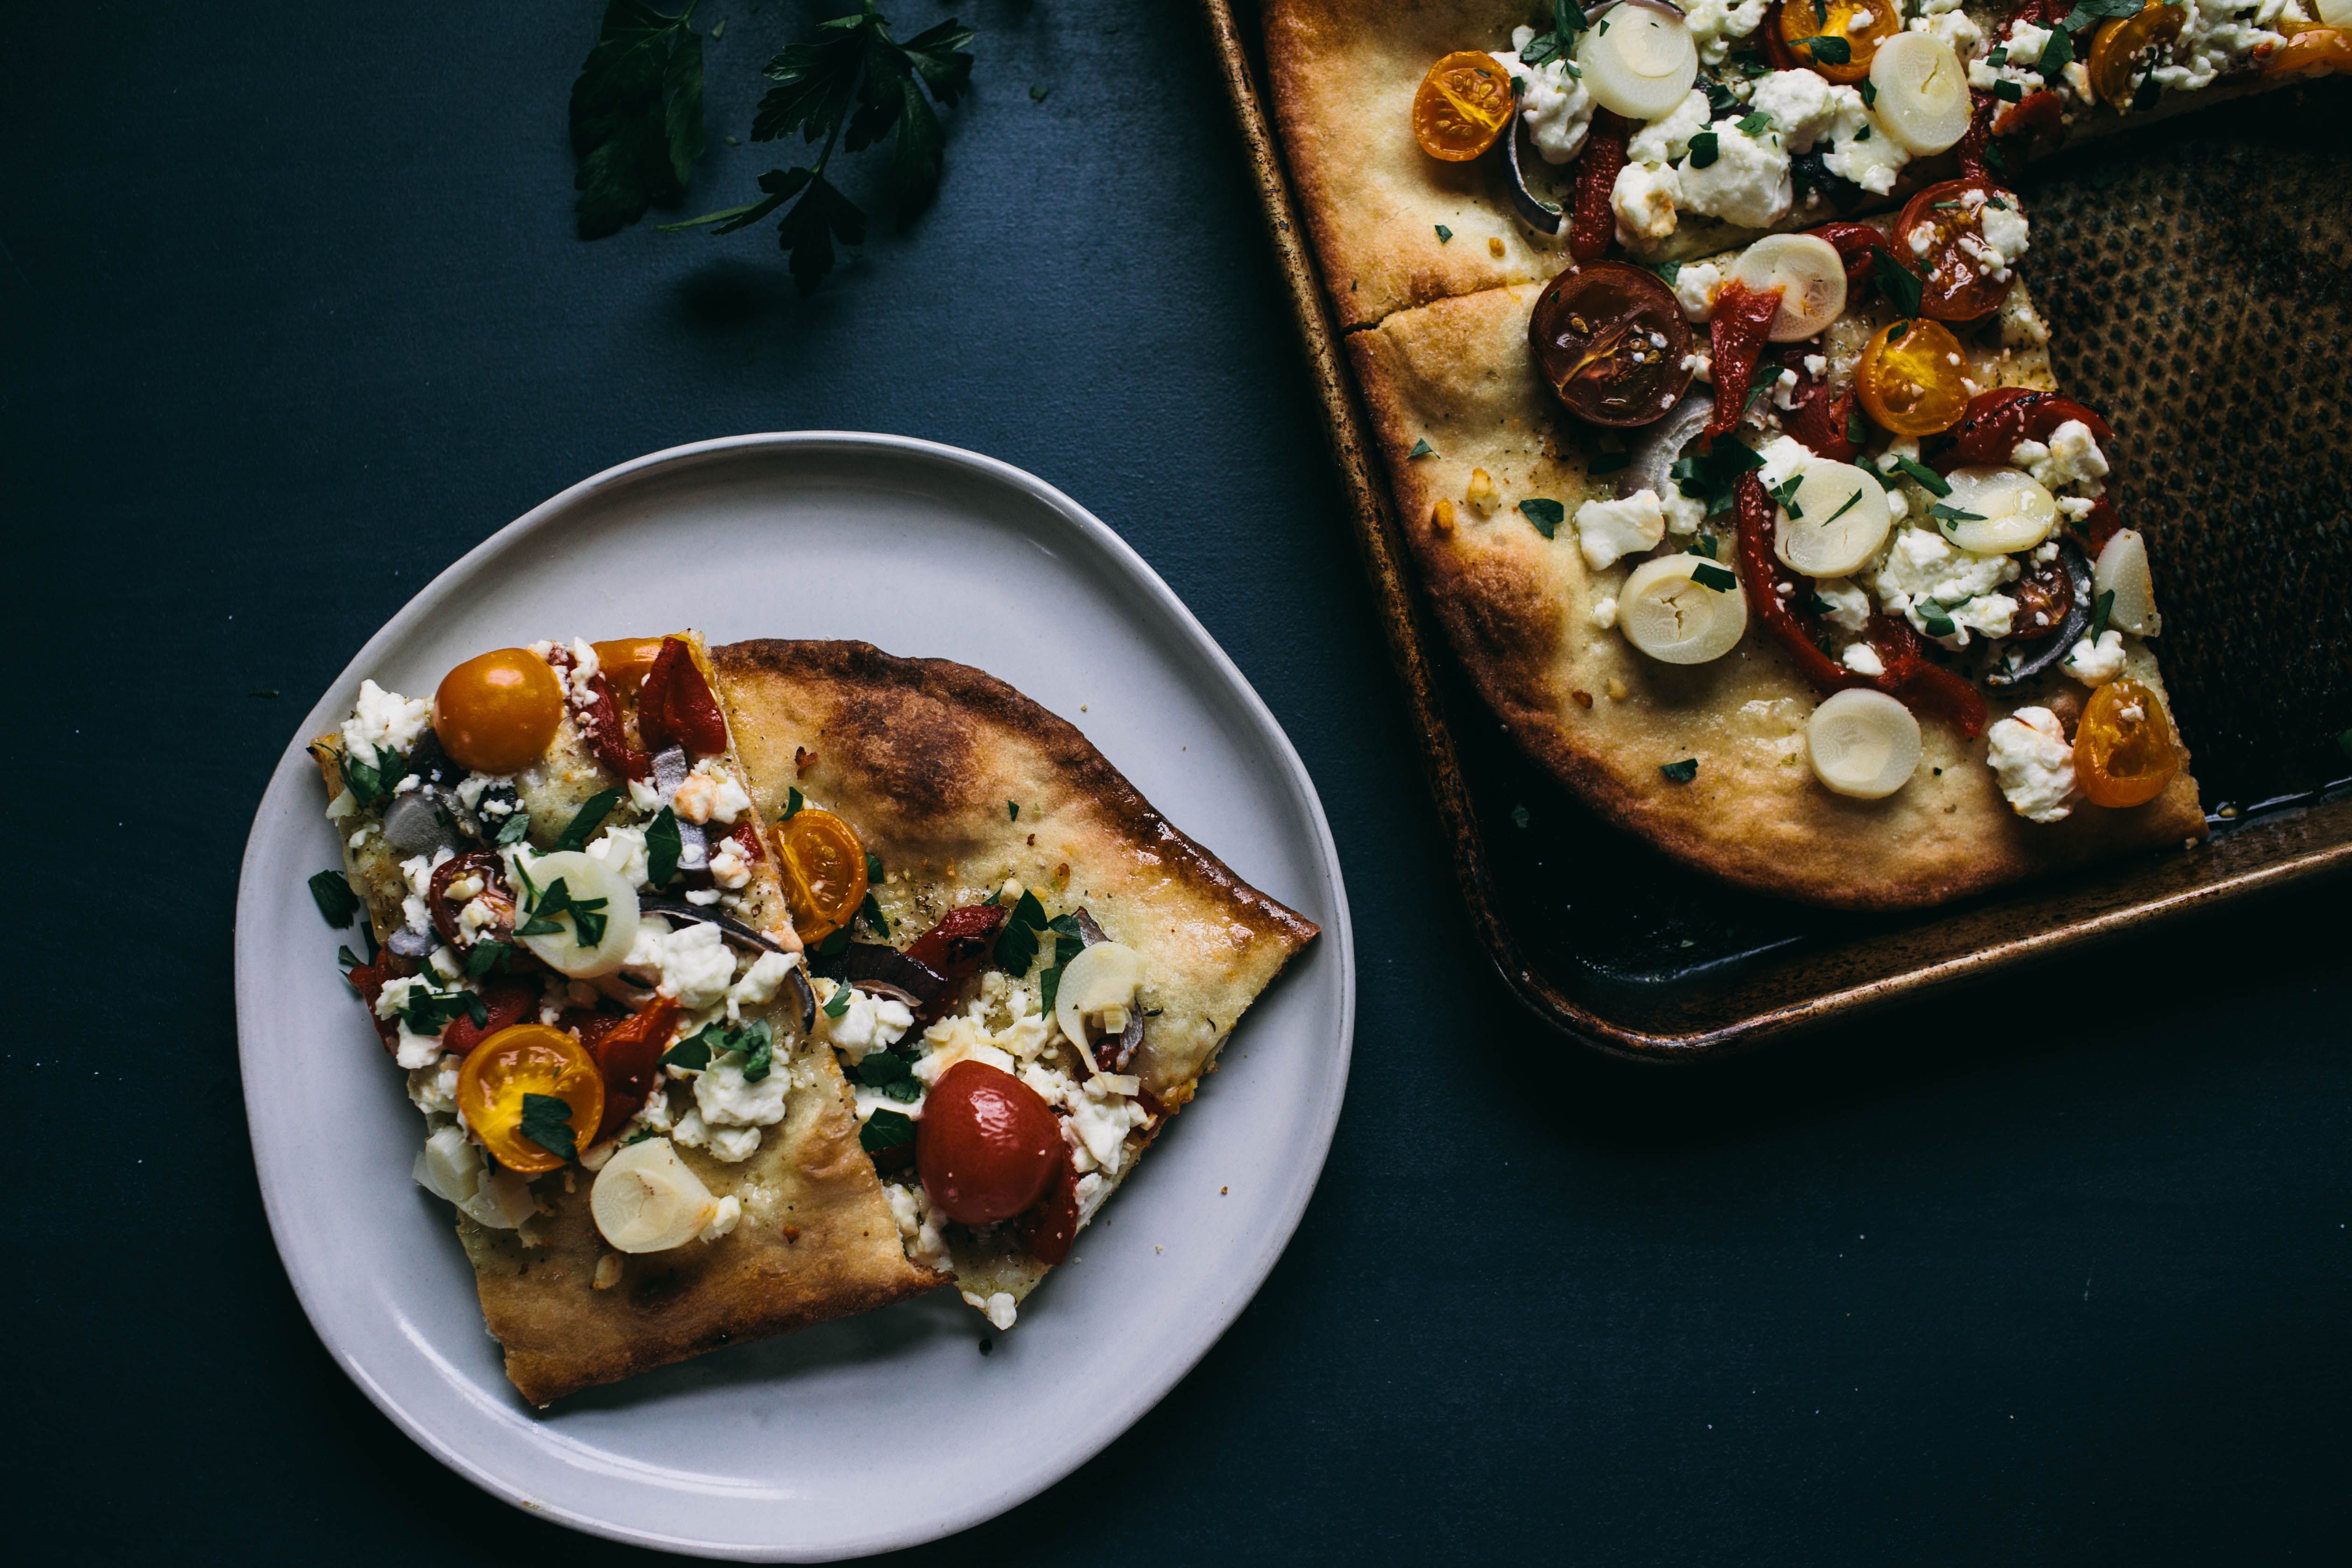 Homemade Mediterranean Pizza